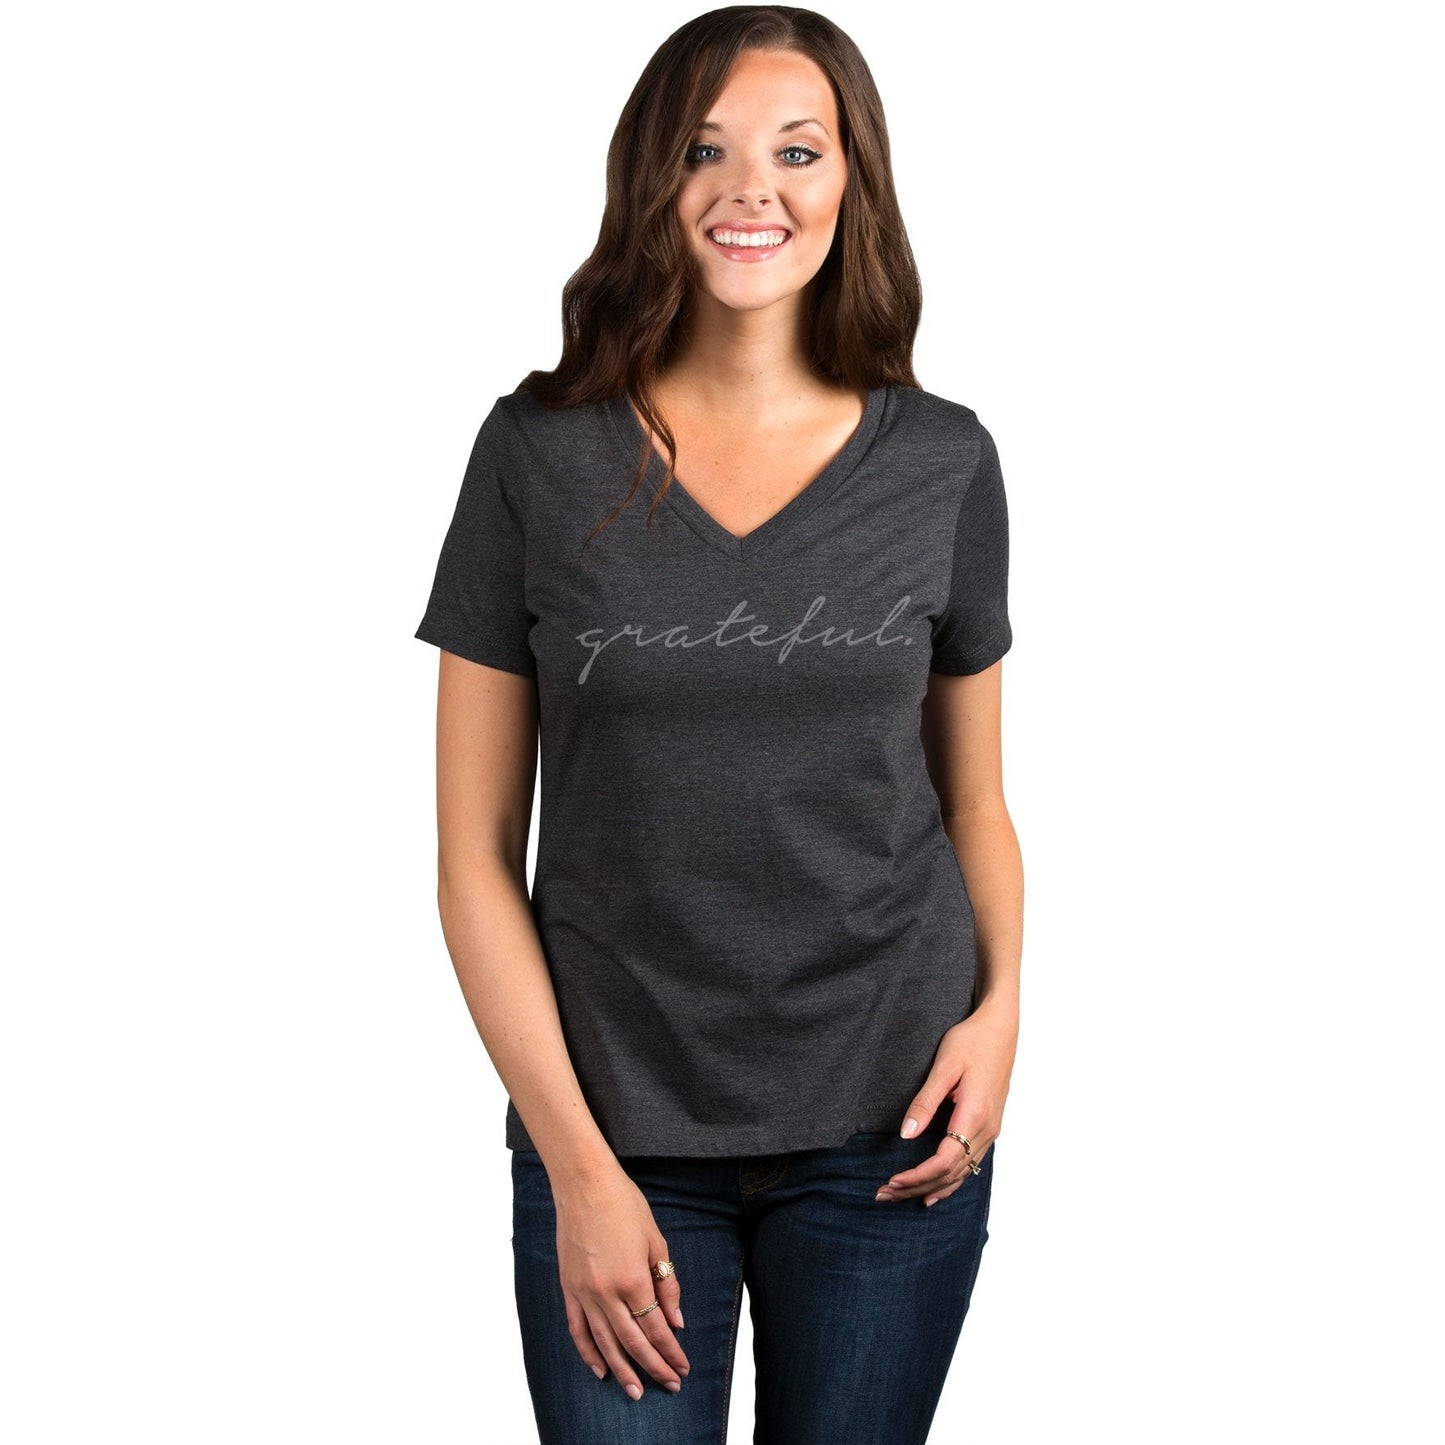 Grateful Women's Relaxed V-Neck T-Shirt Tee Charcoal Model